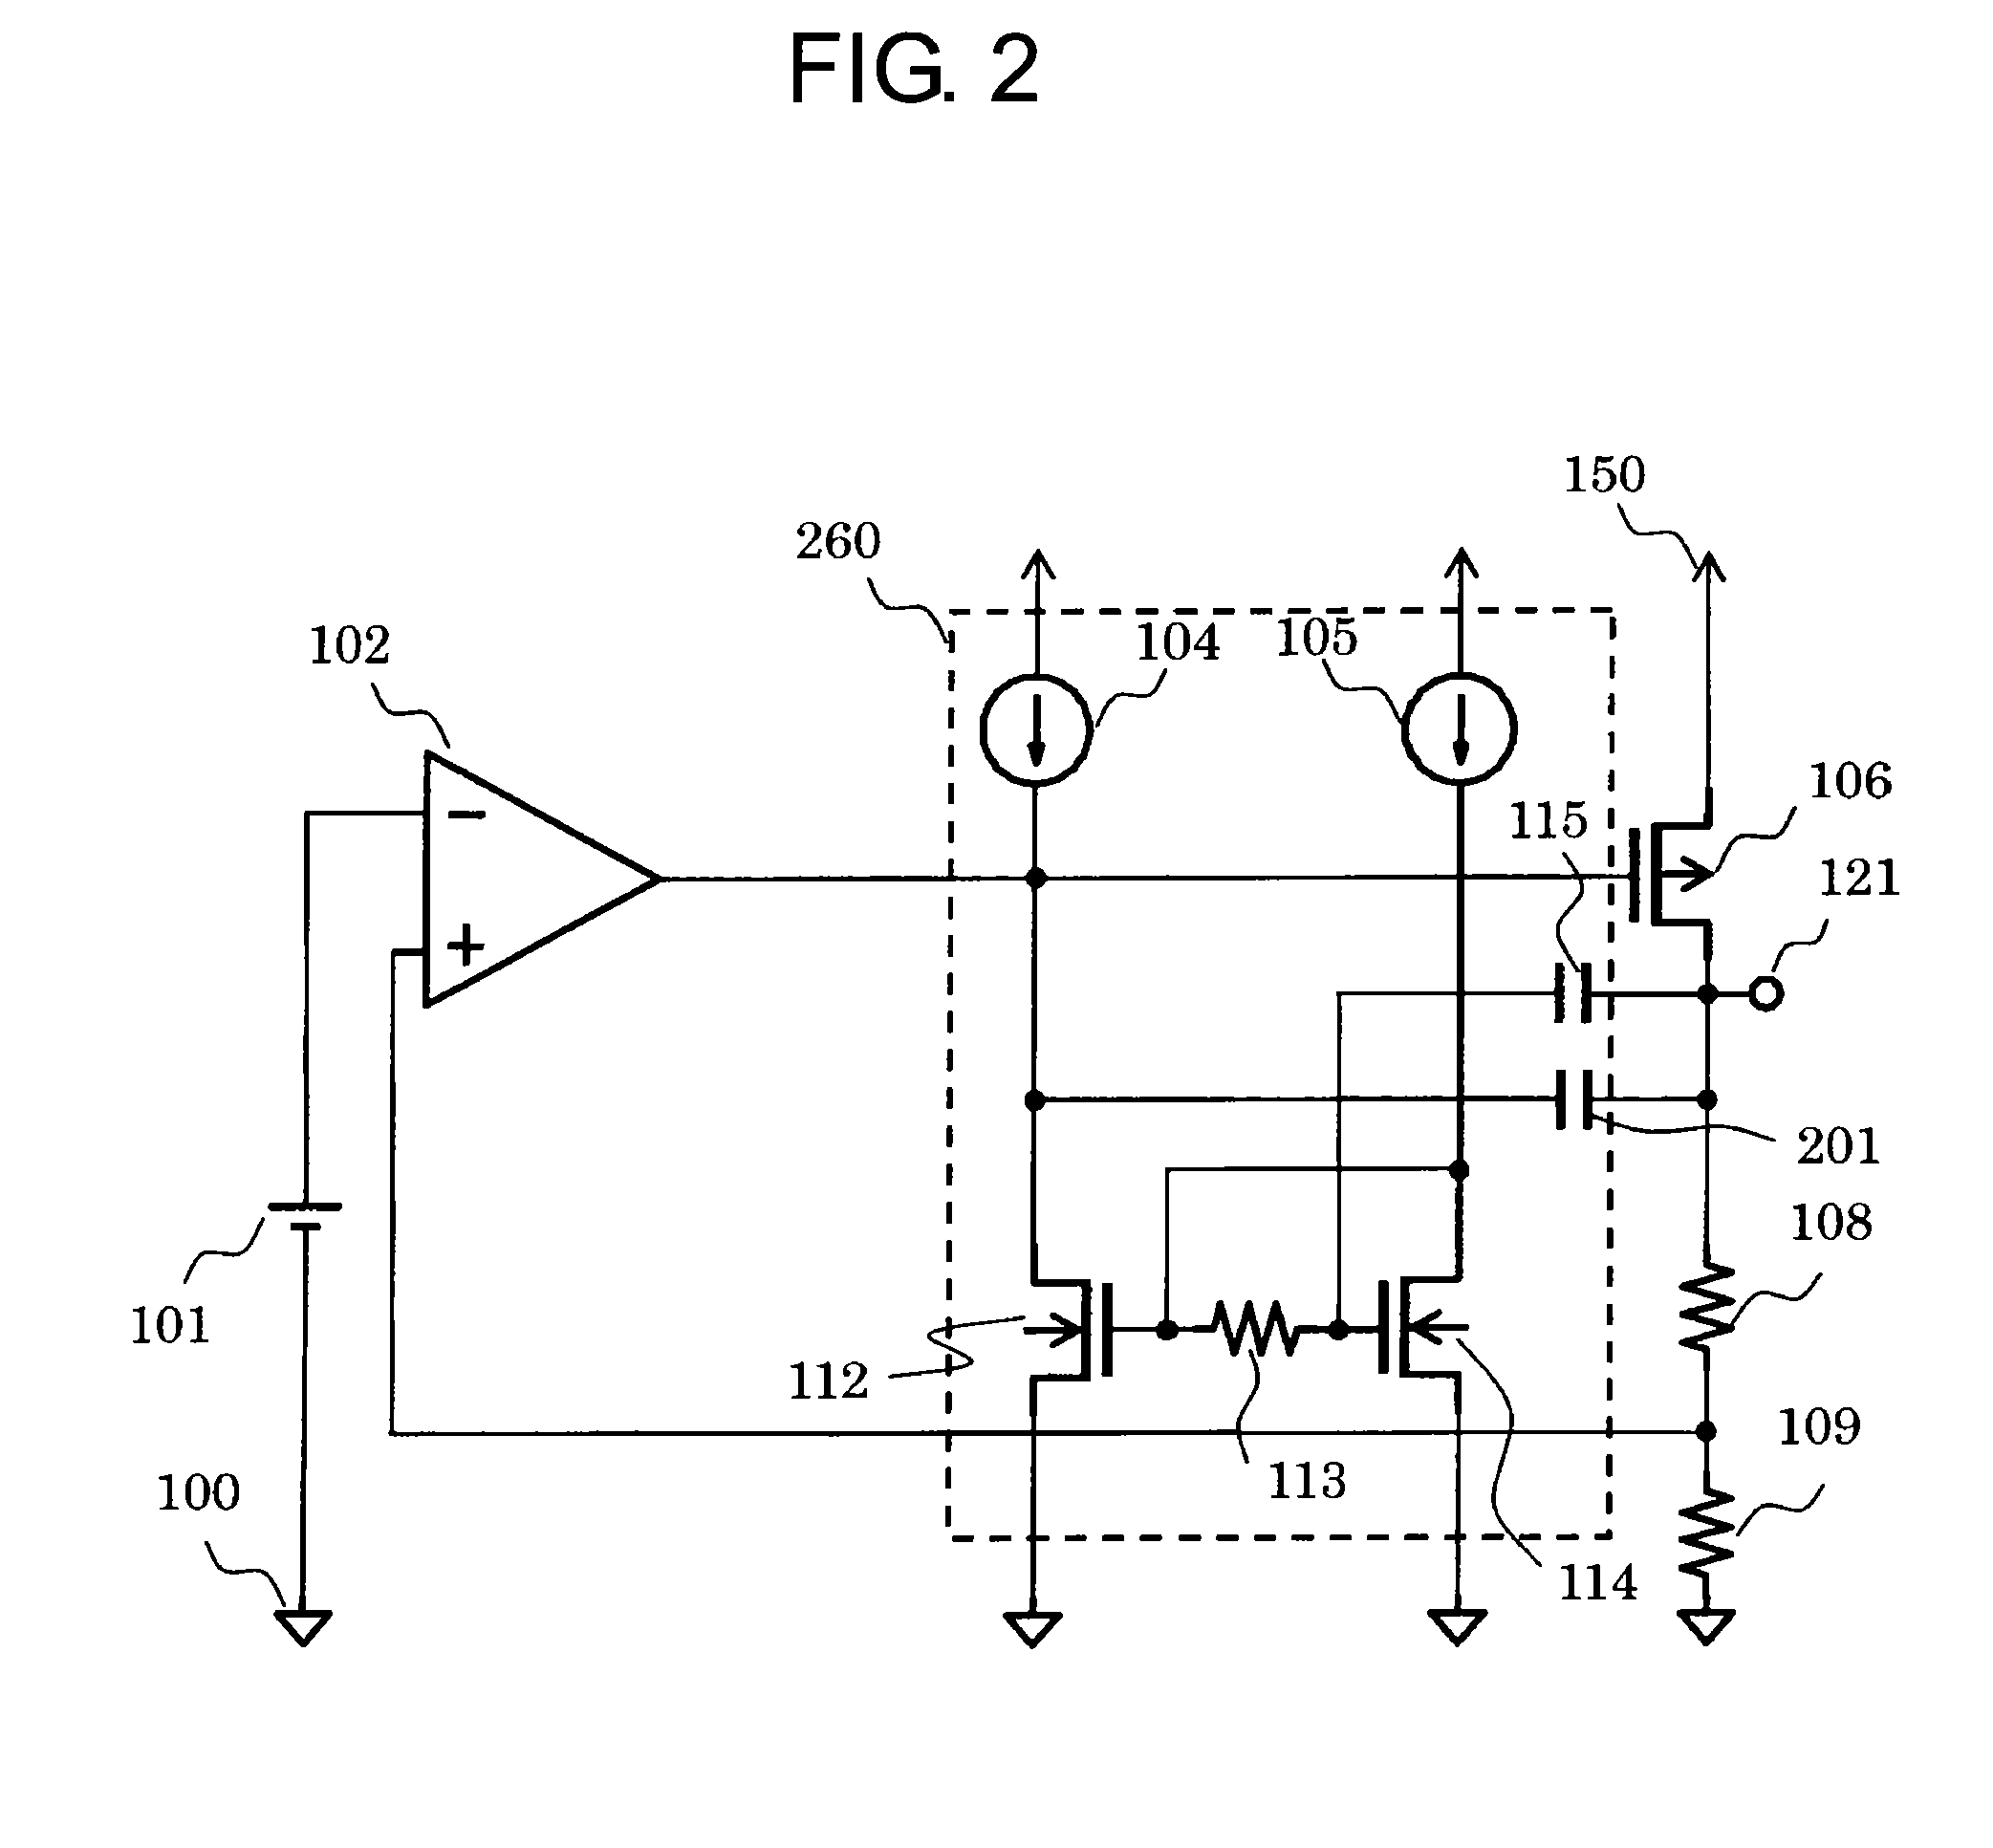 Voltage regulator having a phase compensation circuit